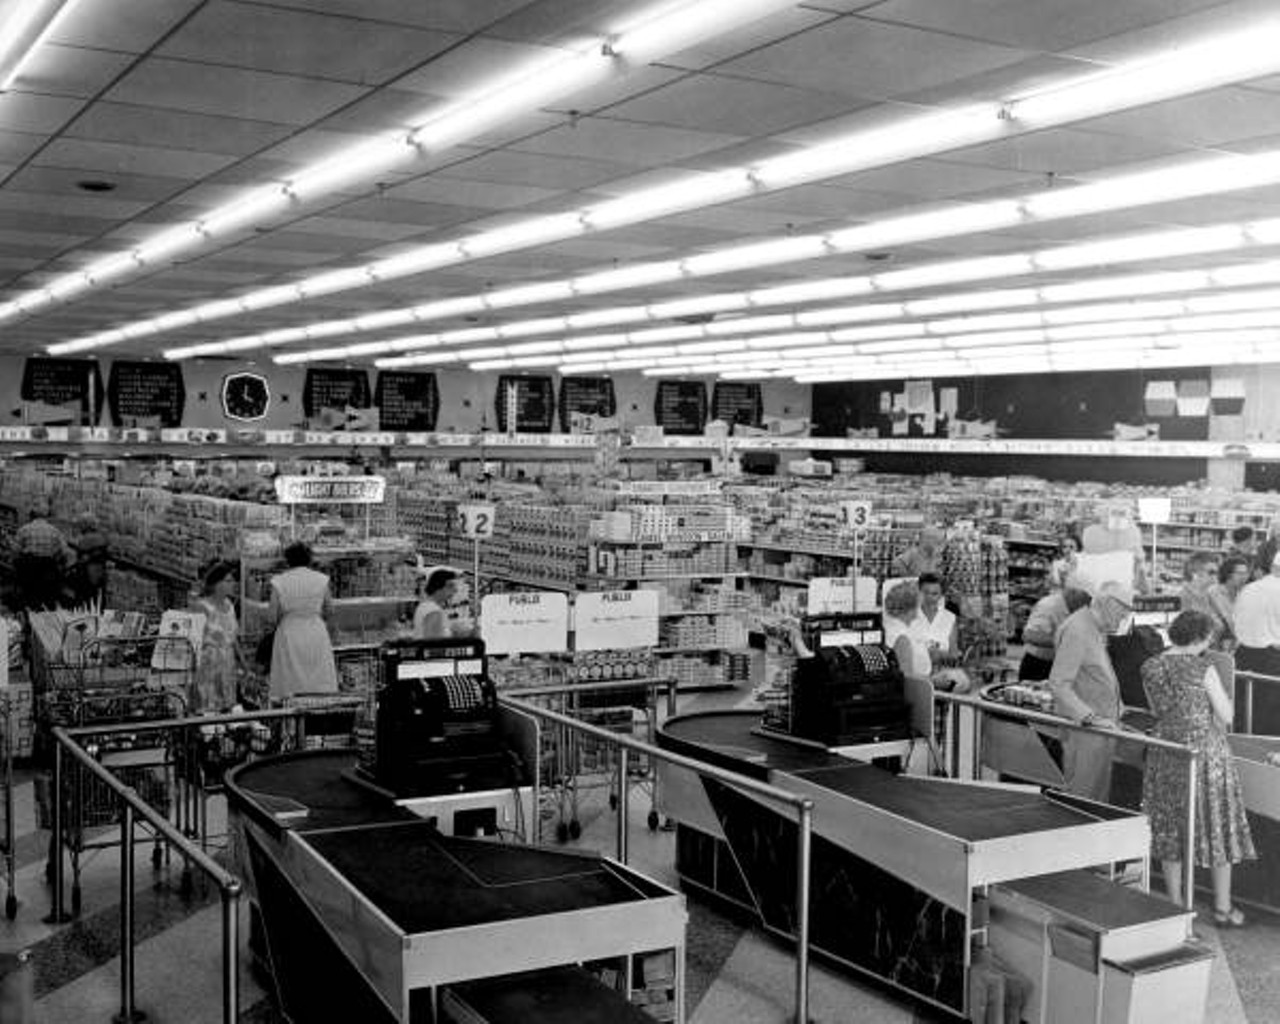 Customers shopping at Publix super market - Saint Petersburg, Florida. 1961.